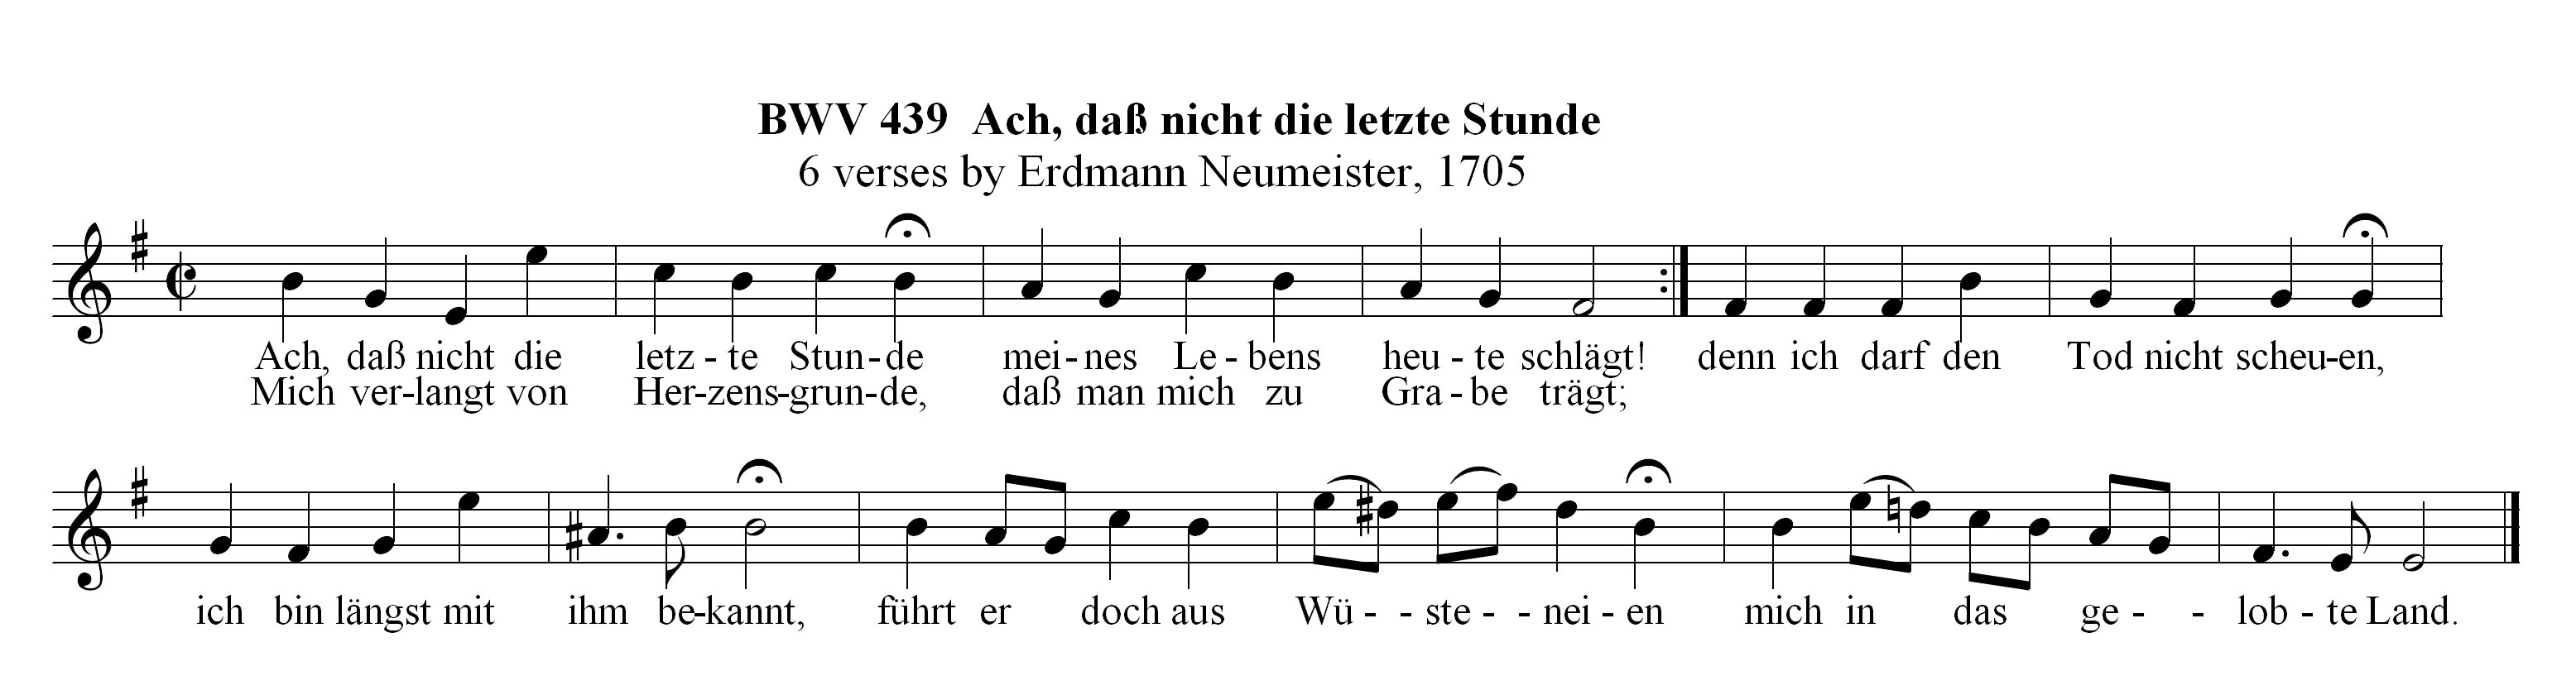 BWV439.jpg